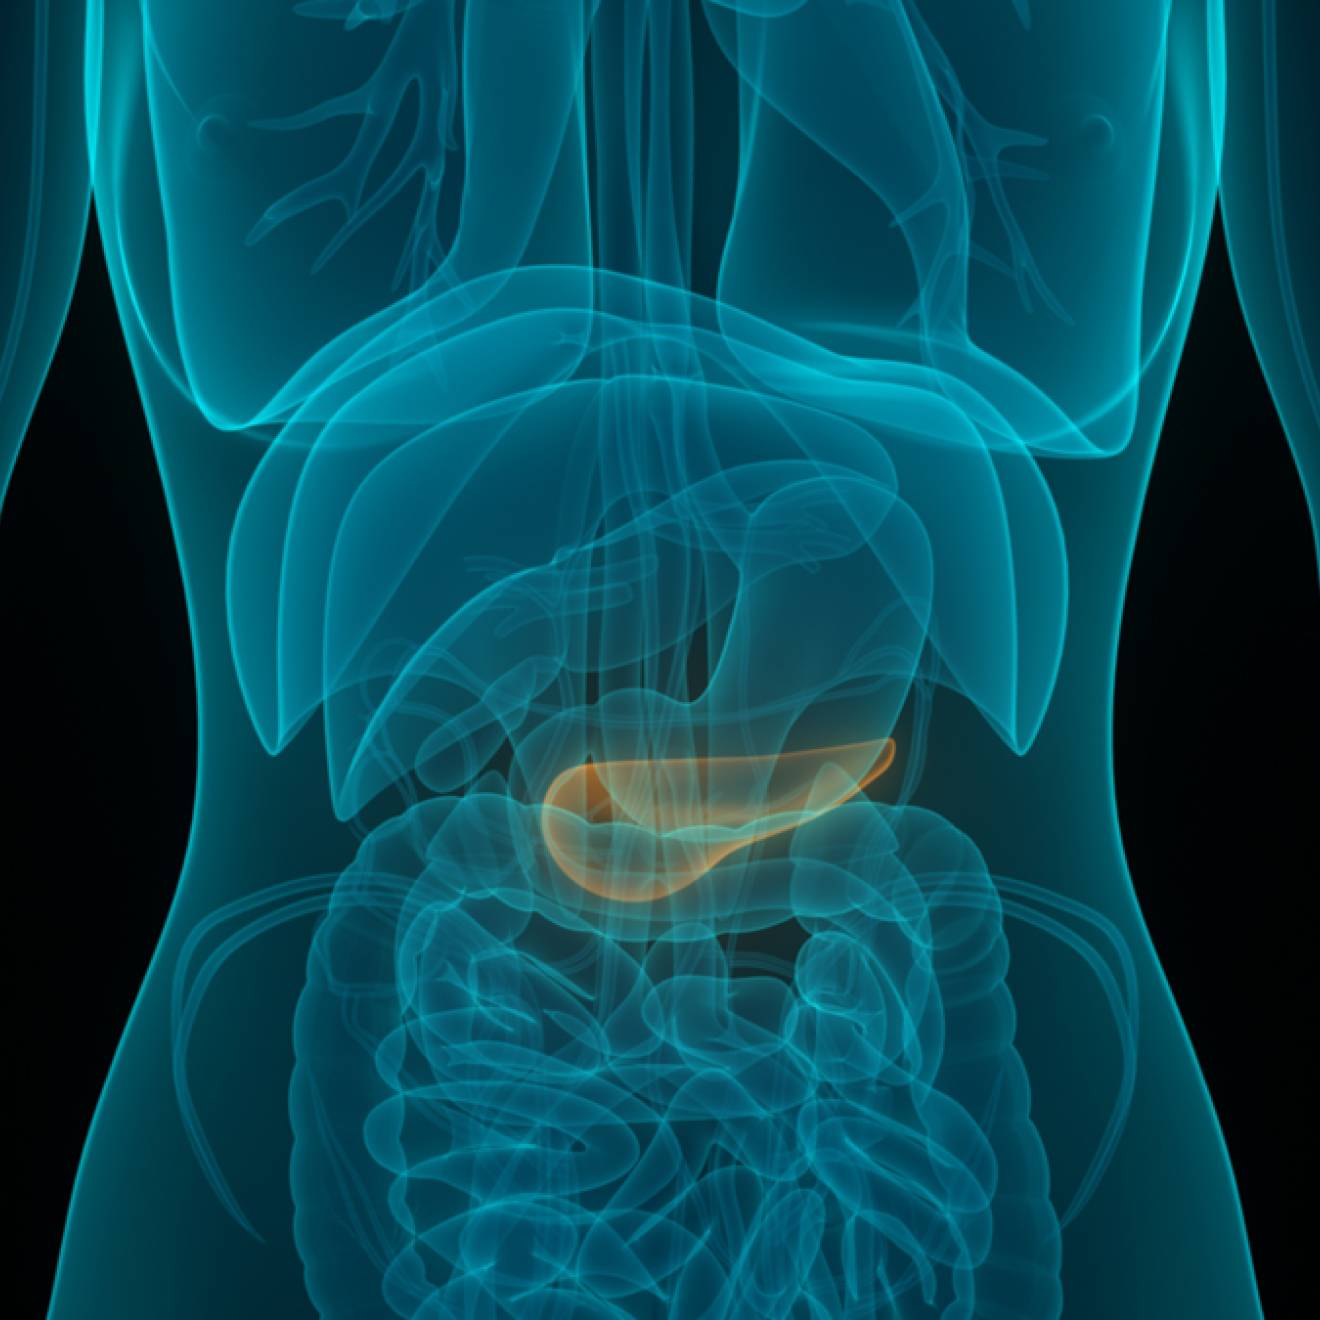 X-ray of human anatomy with pancreas highlighted